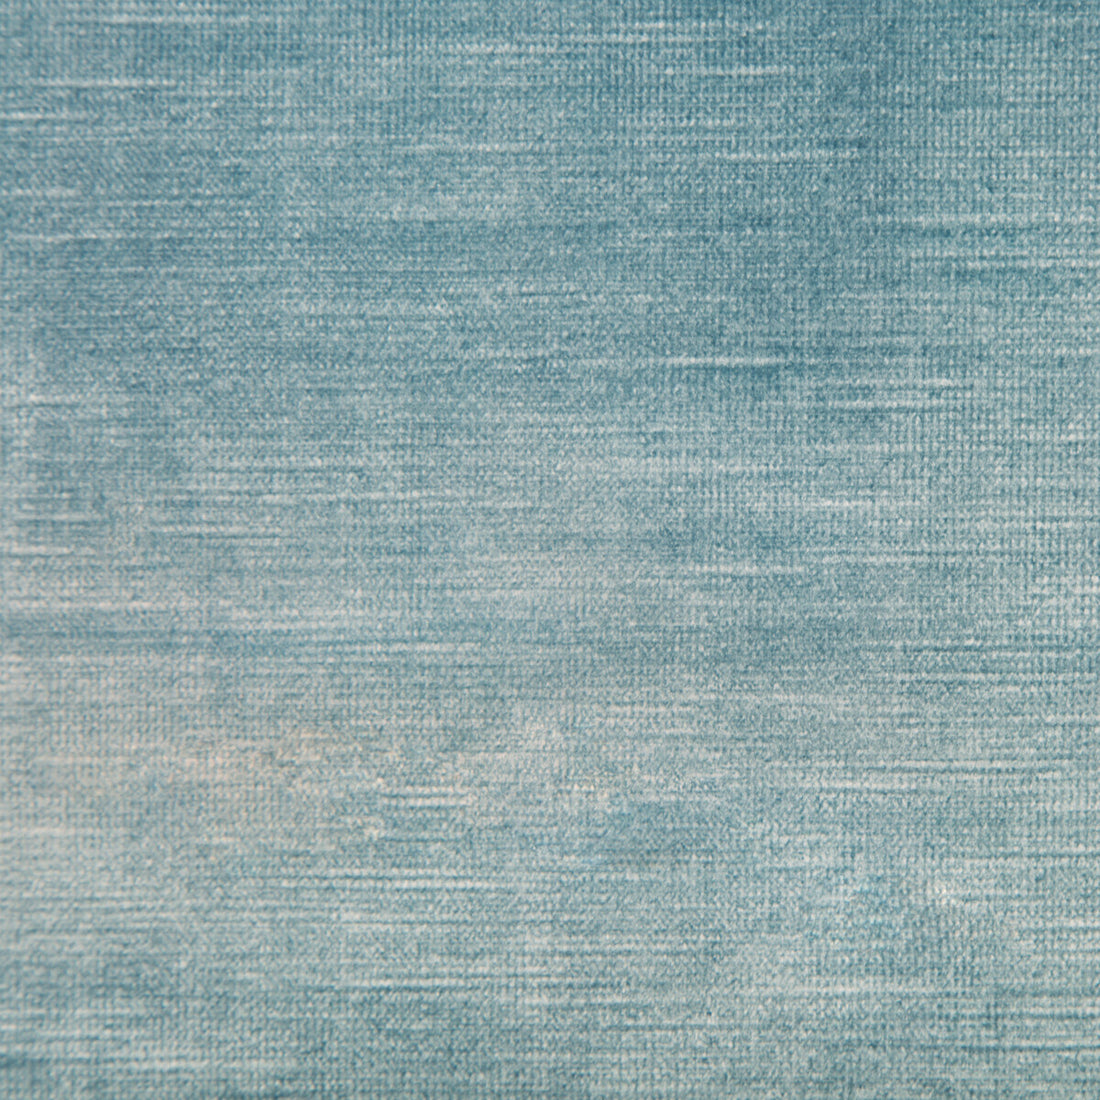 Venetian fabric in ice blue color - pattern 31326.513.0 - by Kravet Design